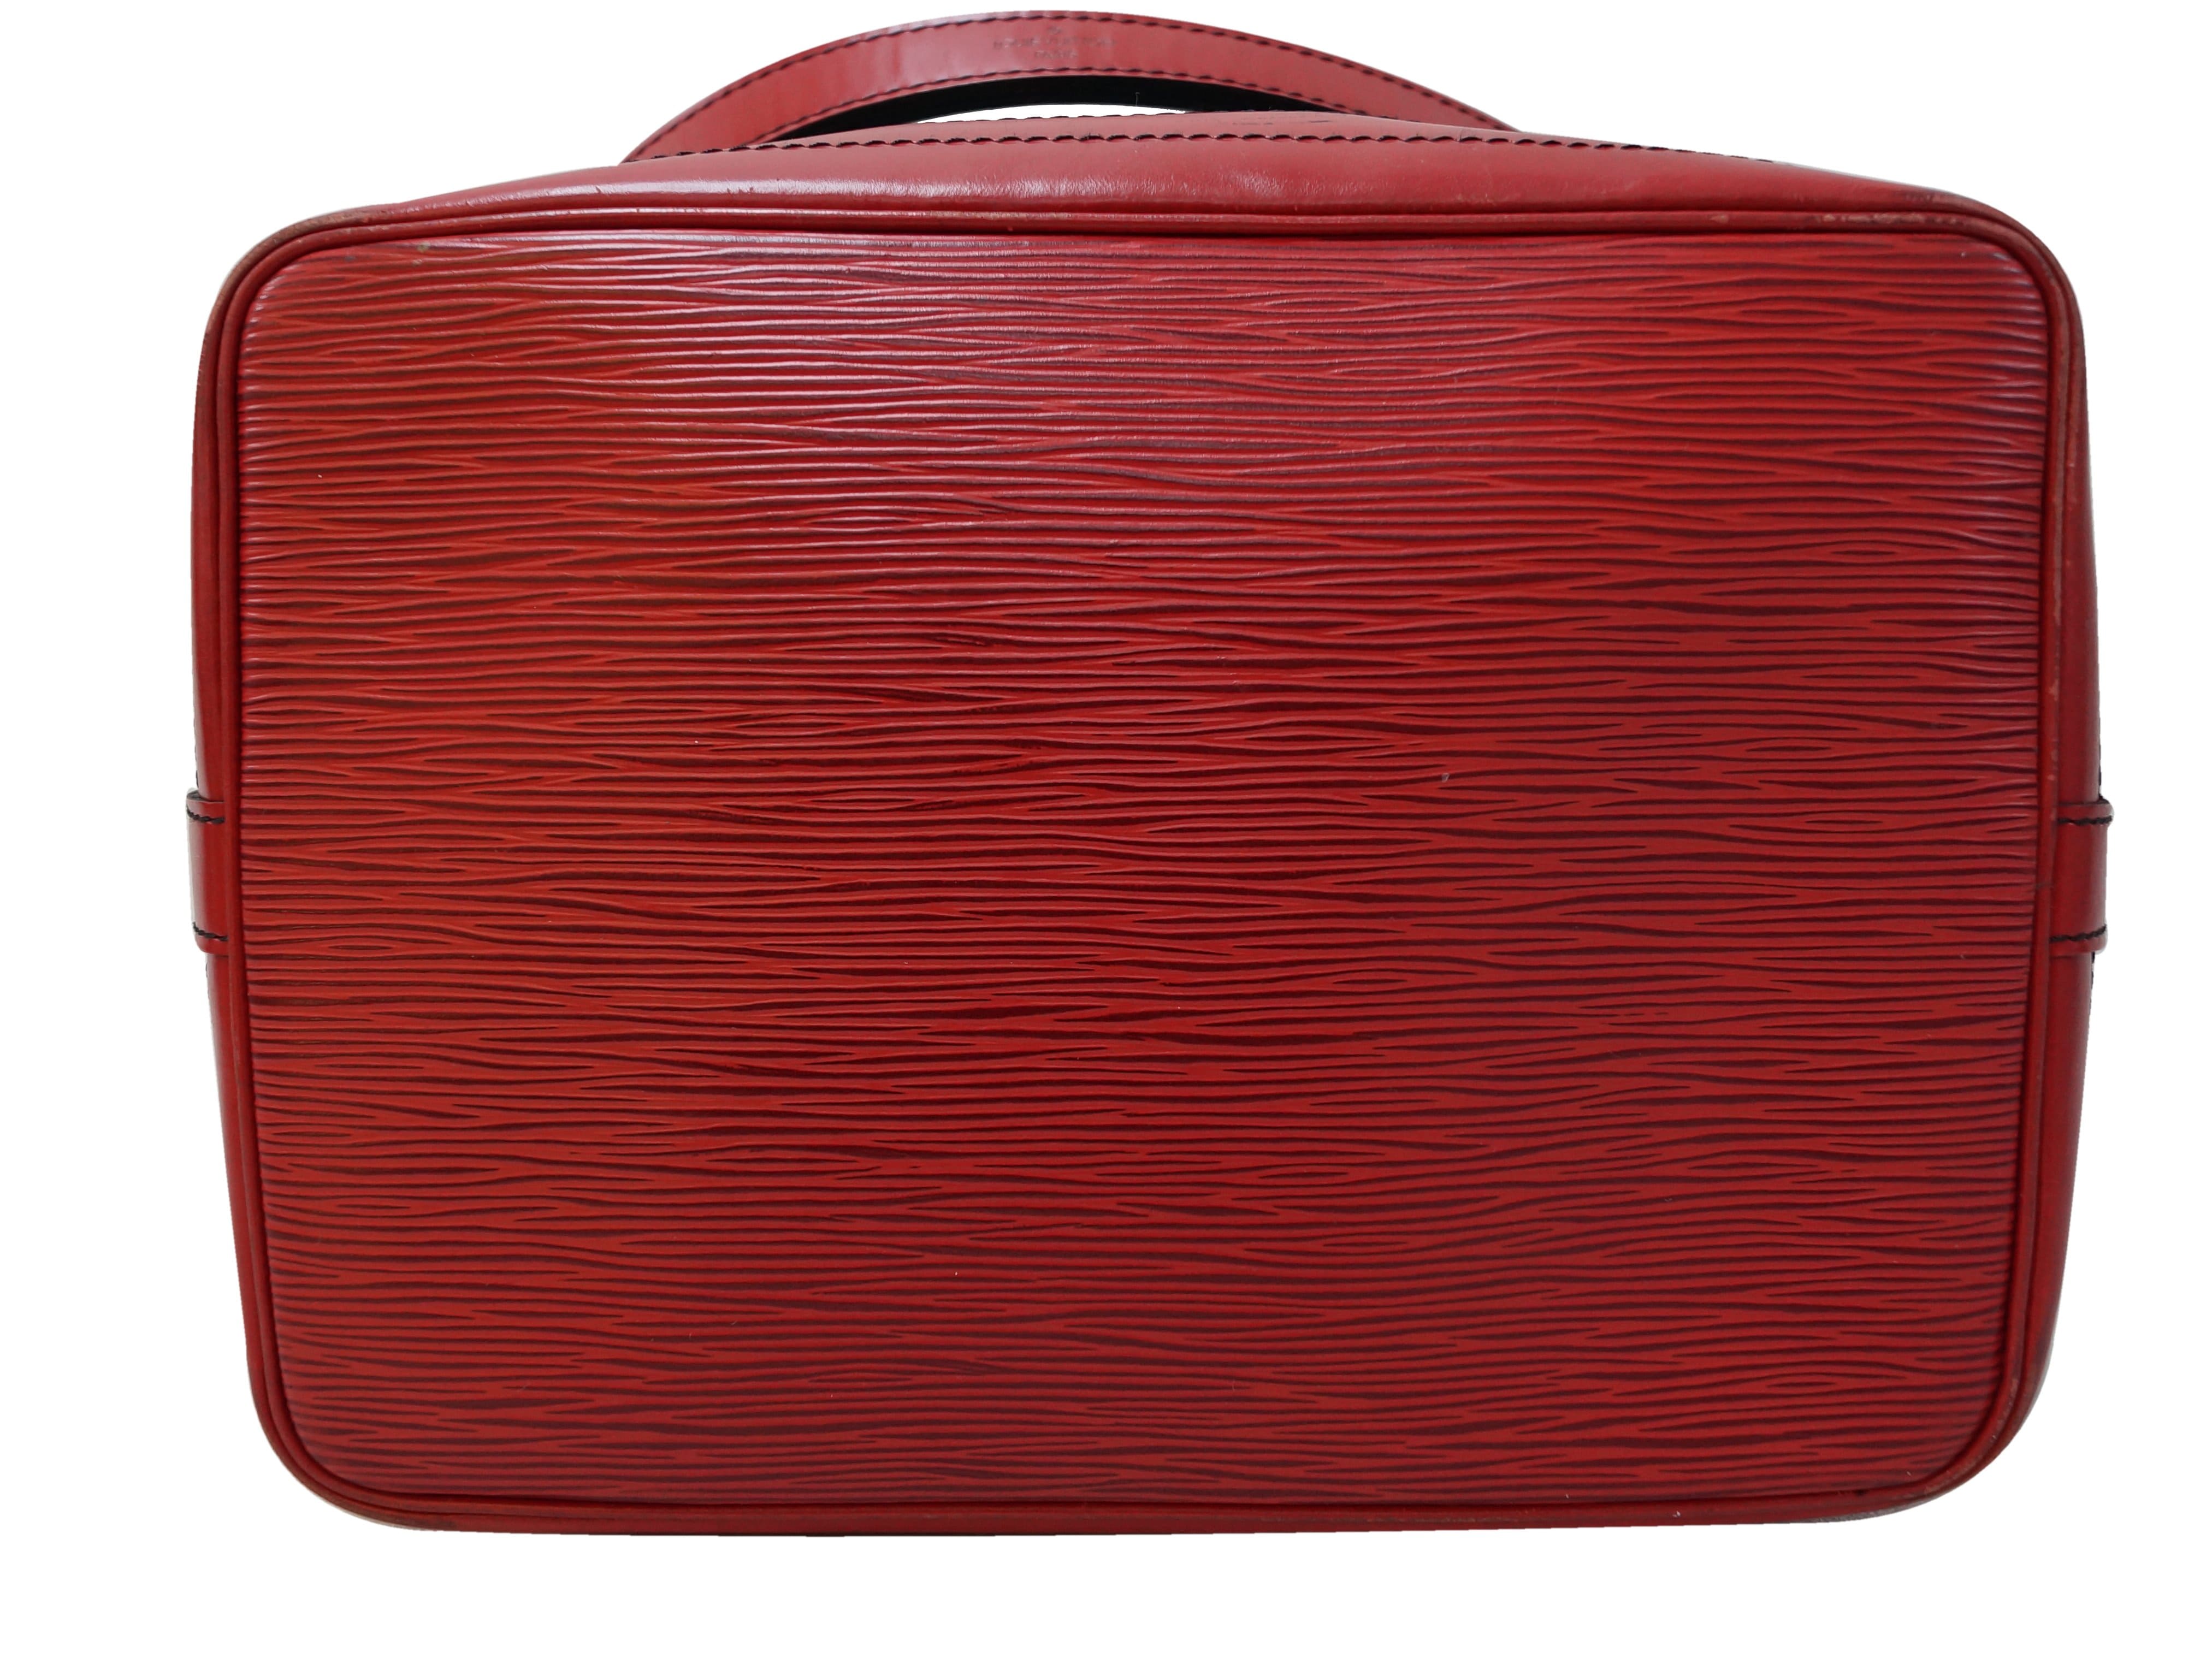 Cloth handbag Louis Vuitton Black in Cloth - 31779478